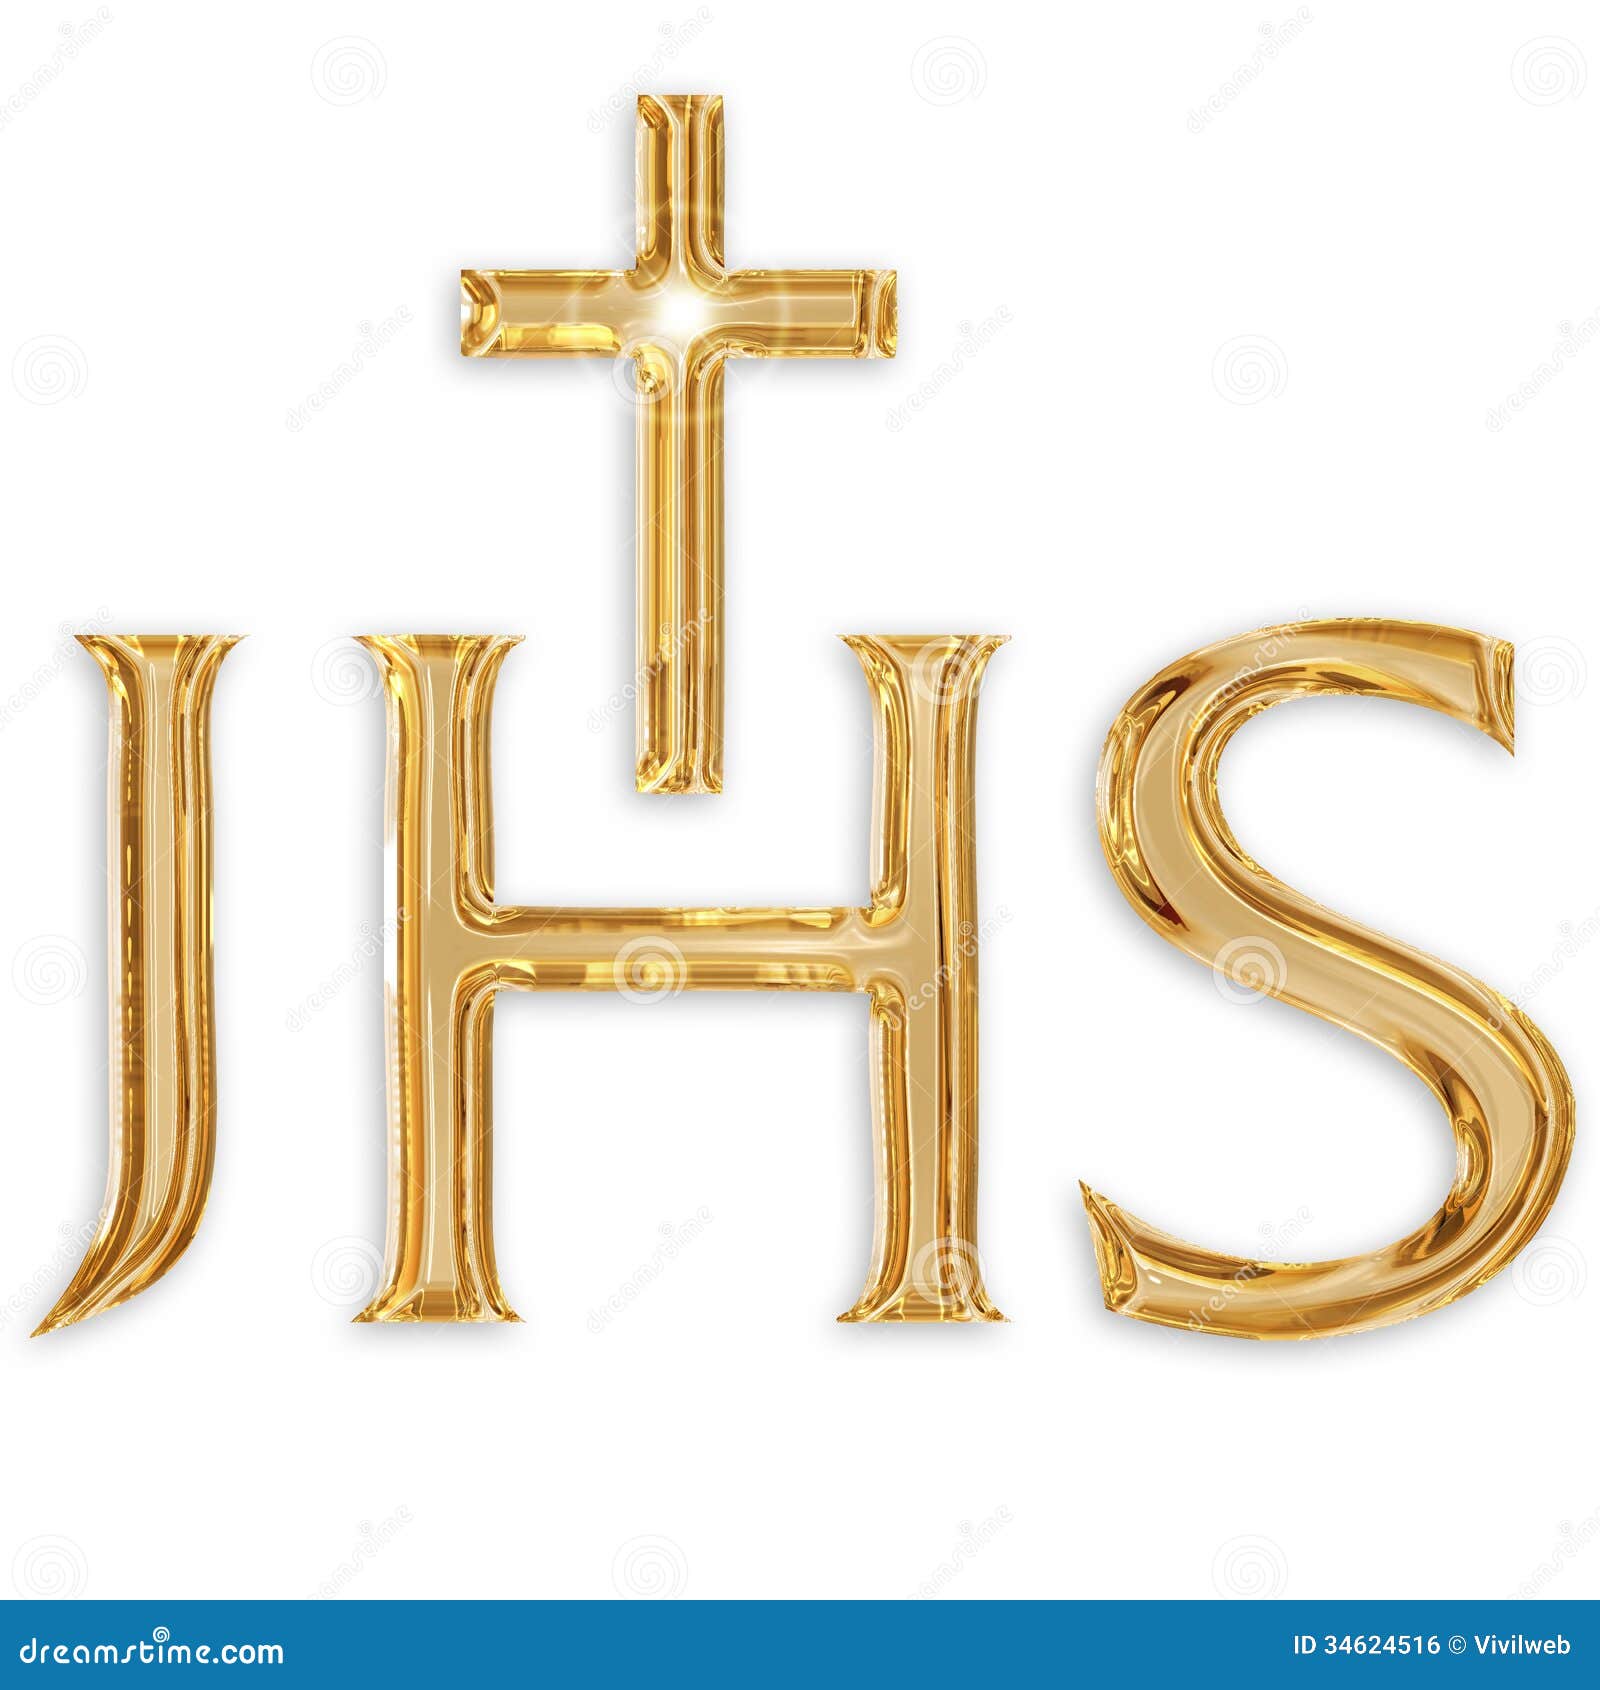 Jesus christ monogram stock illustration. Illustration of gospel - 34624516